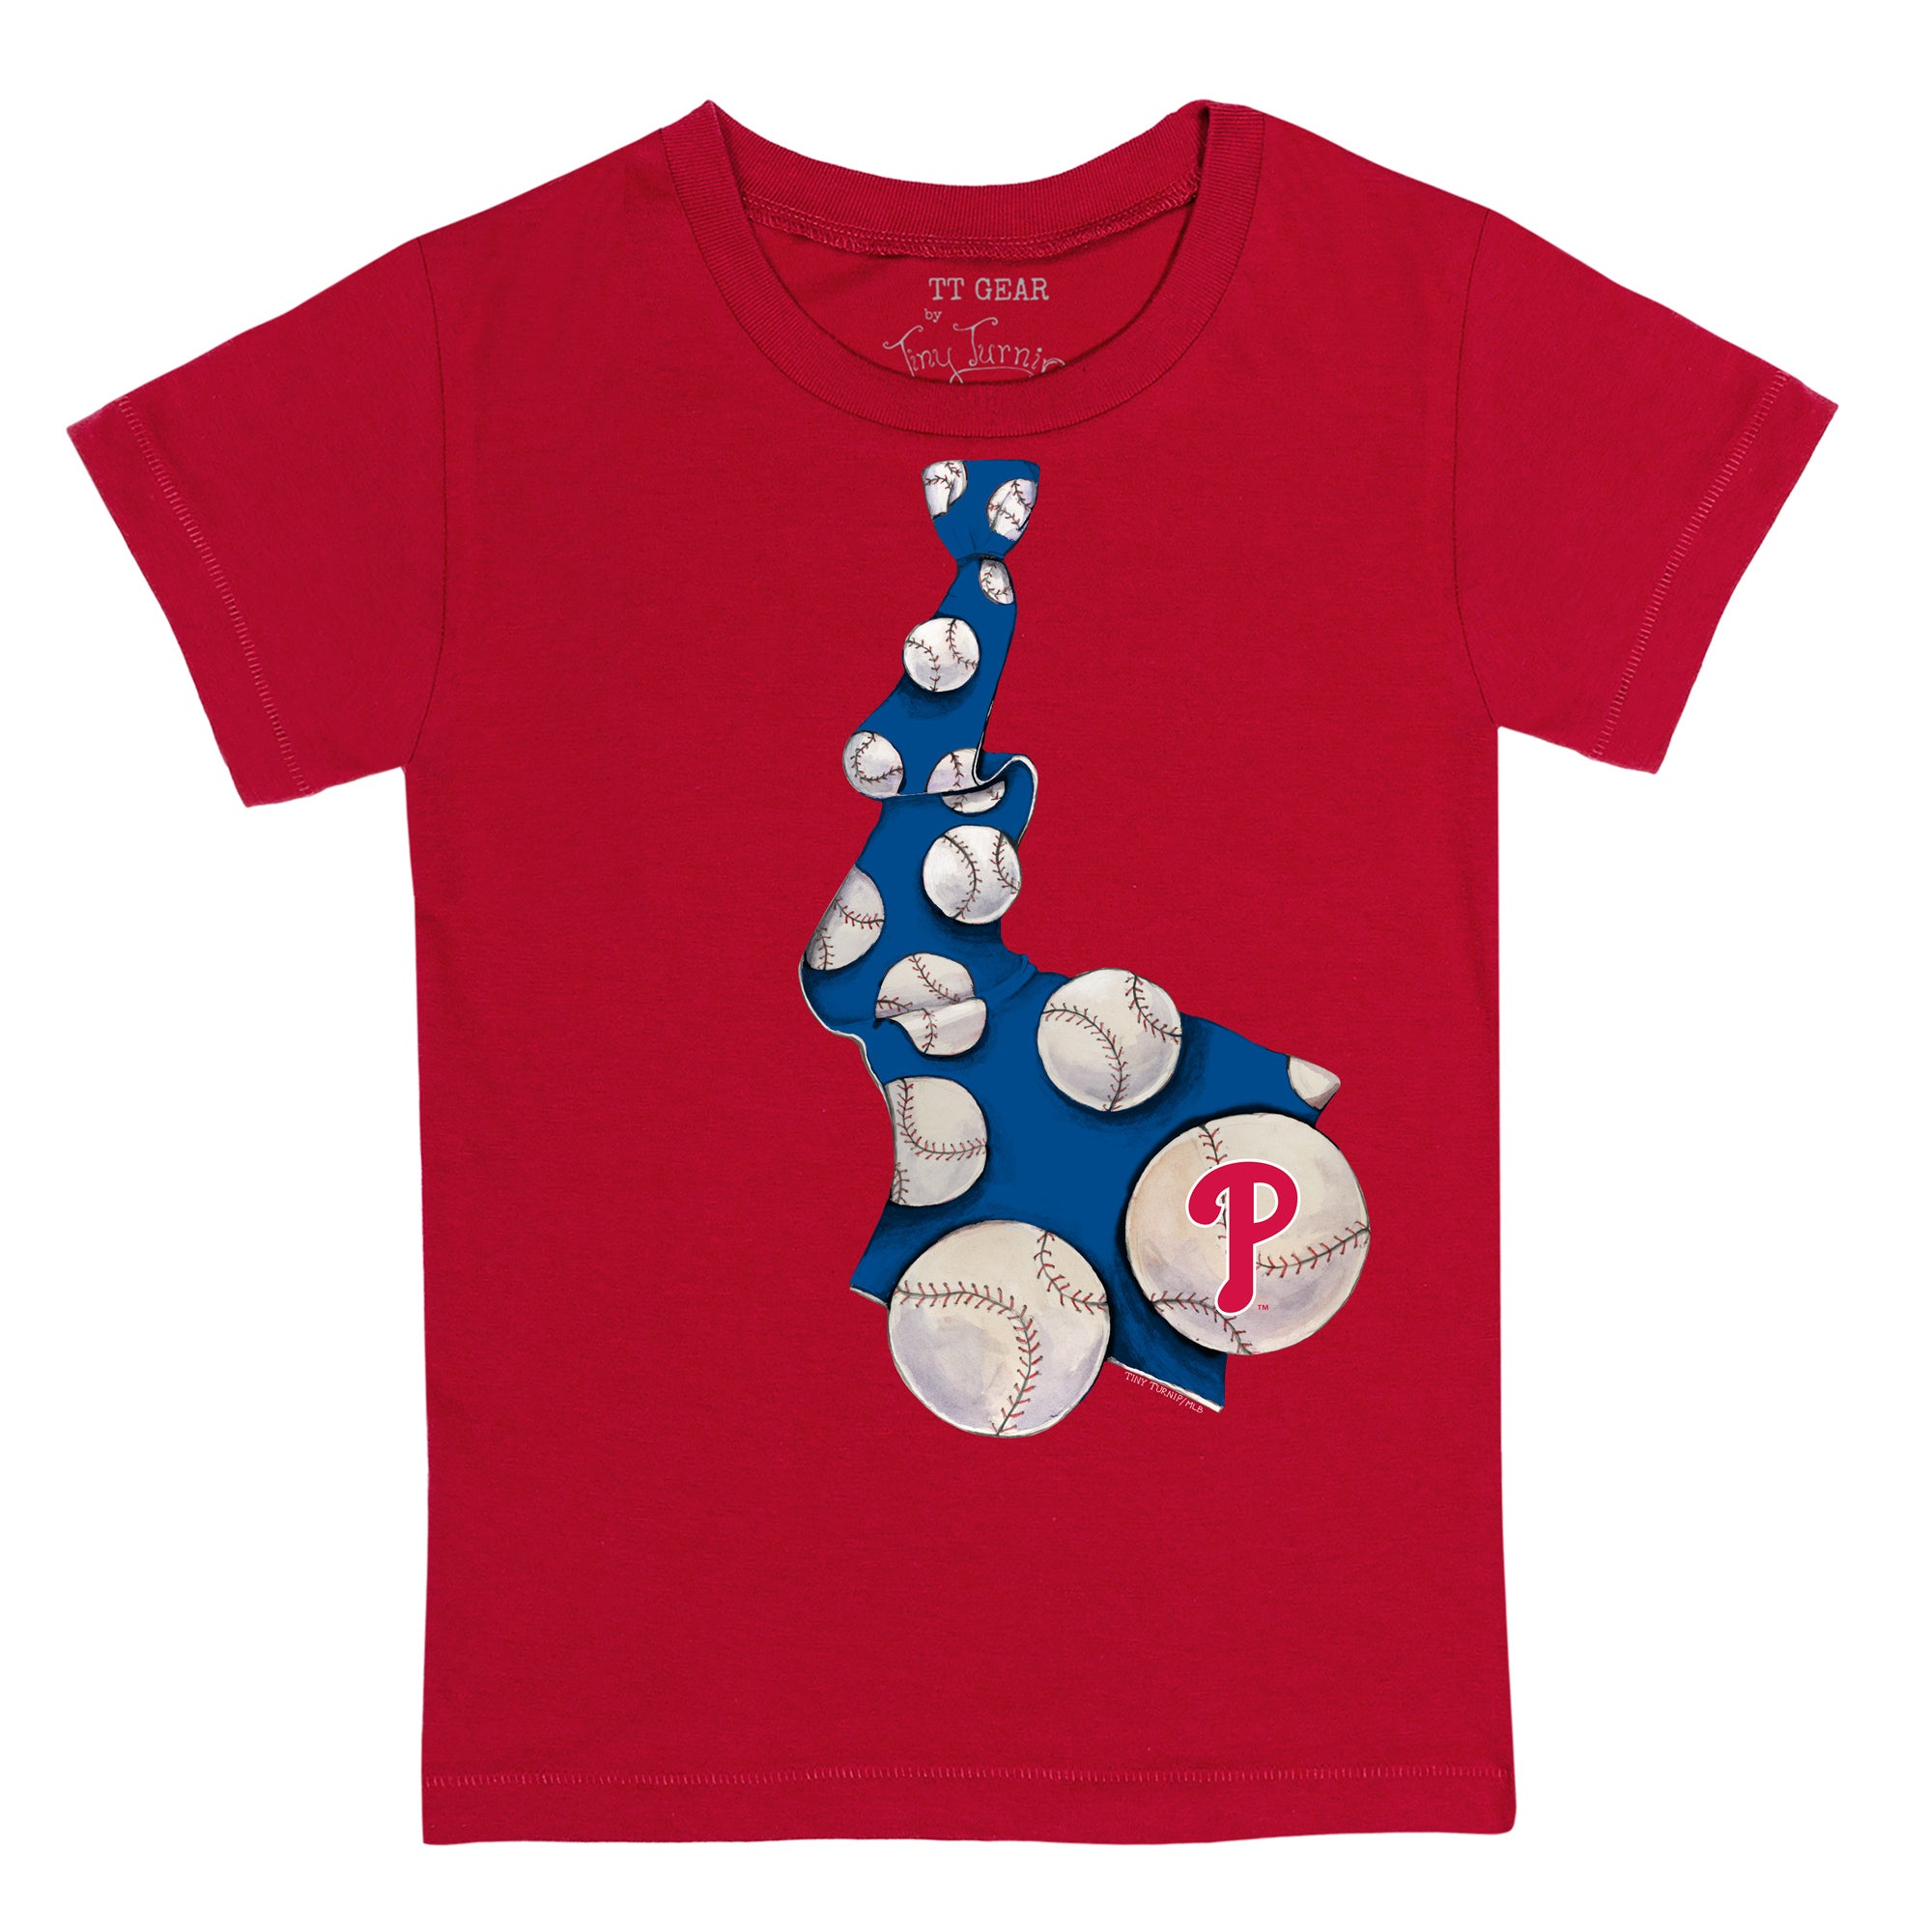 Youth Tiny Turnip Red Philadelphia Phillies Baseball Love T-Shirt Size: Medium